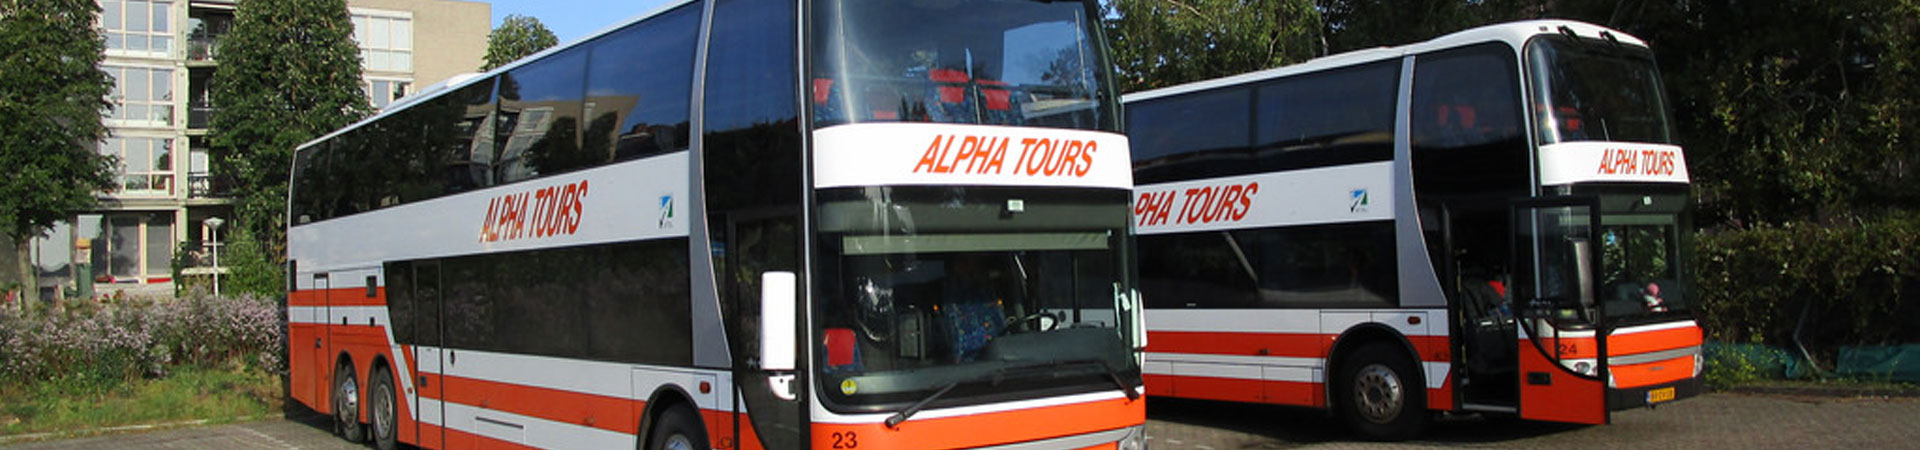 alfa tours kft